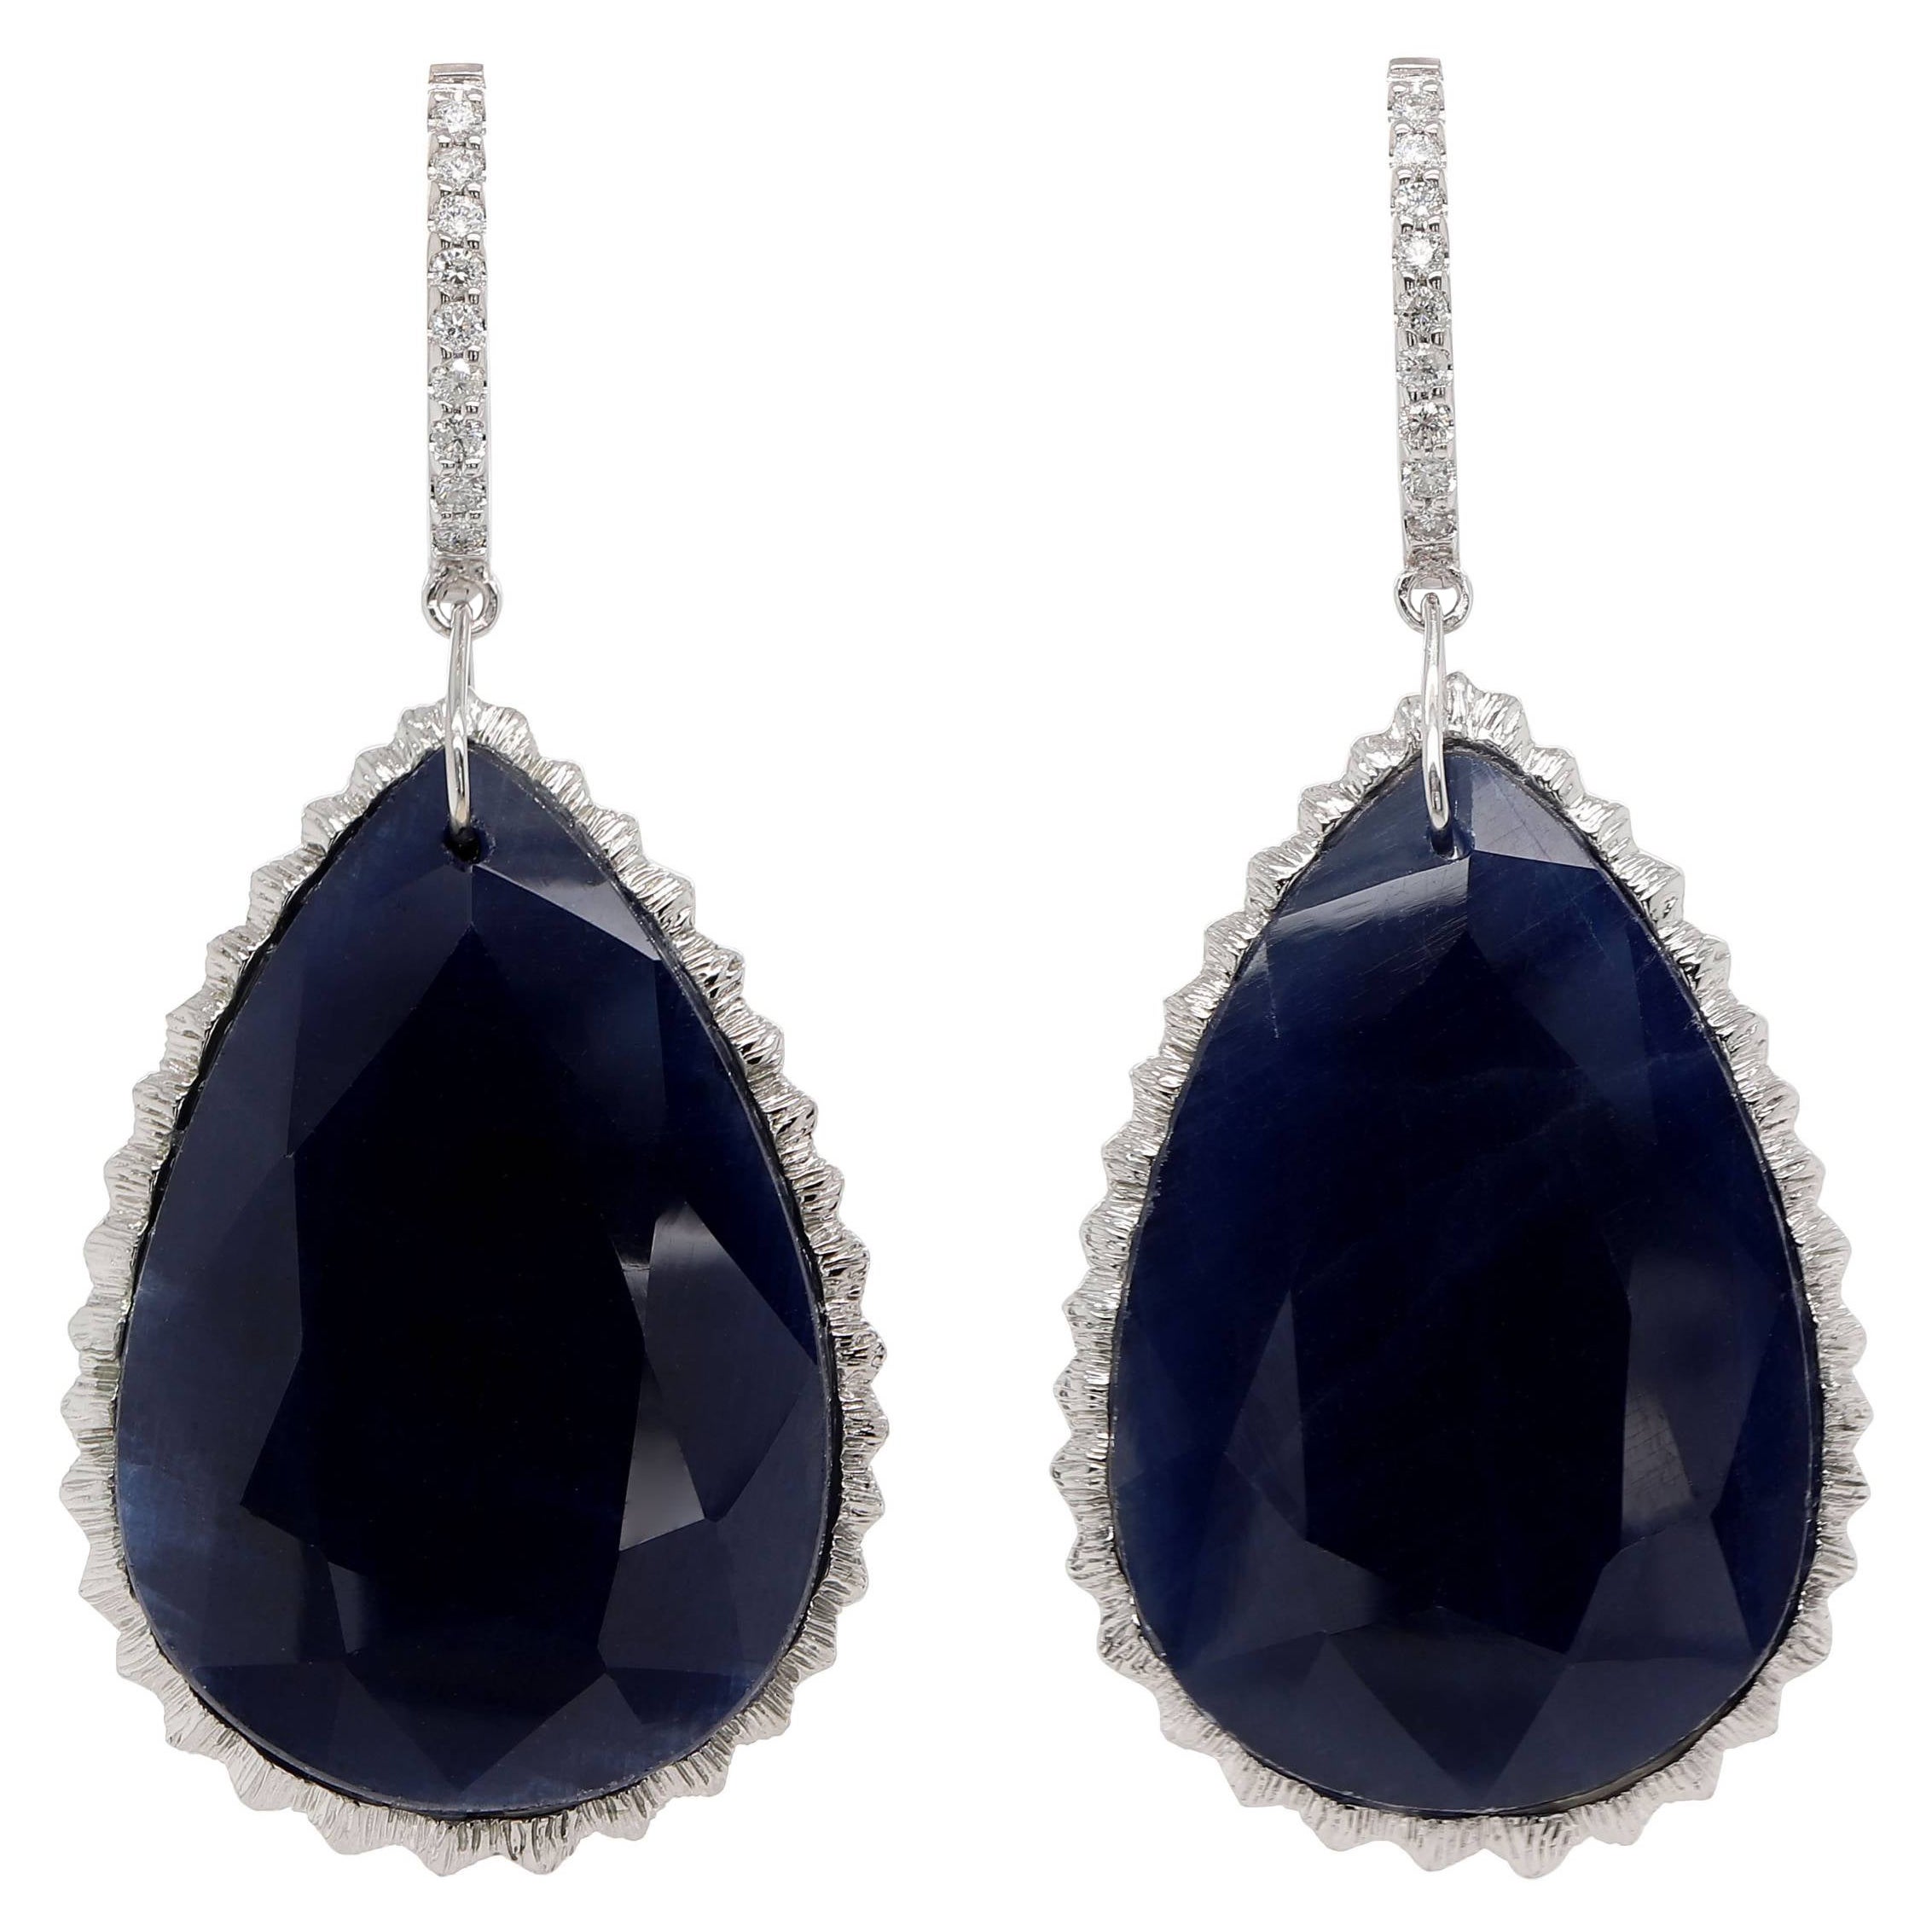 Blue Cabuchon Pear Shape Sapphire Earrings in 18k White Gold 